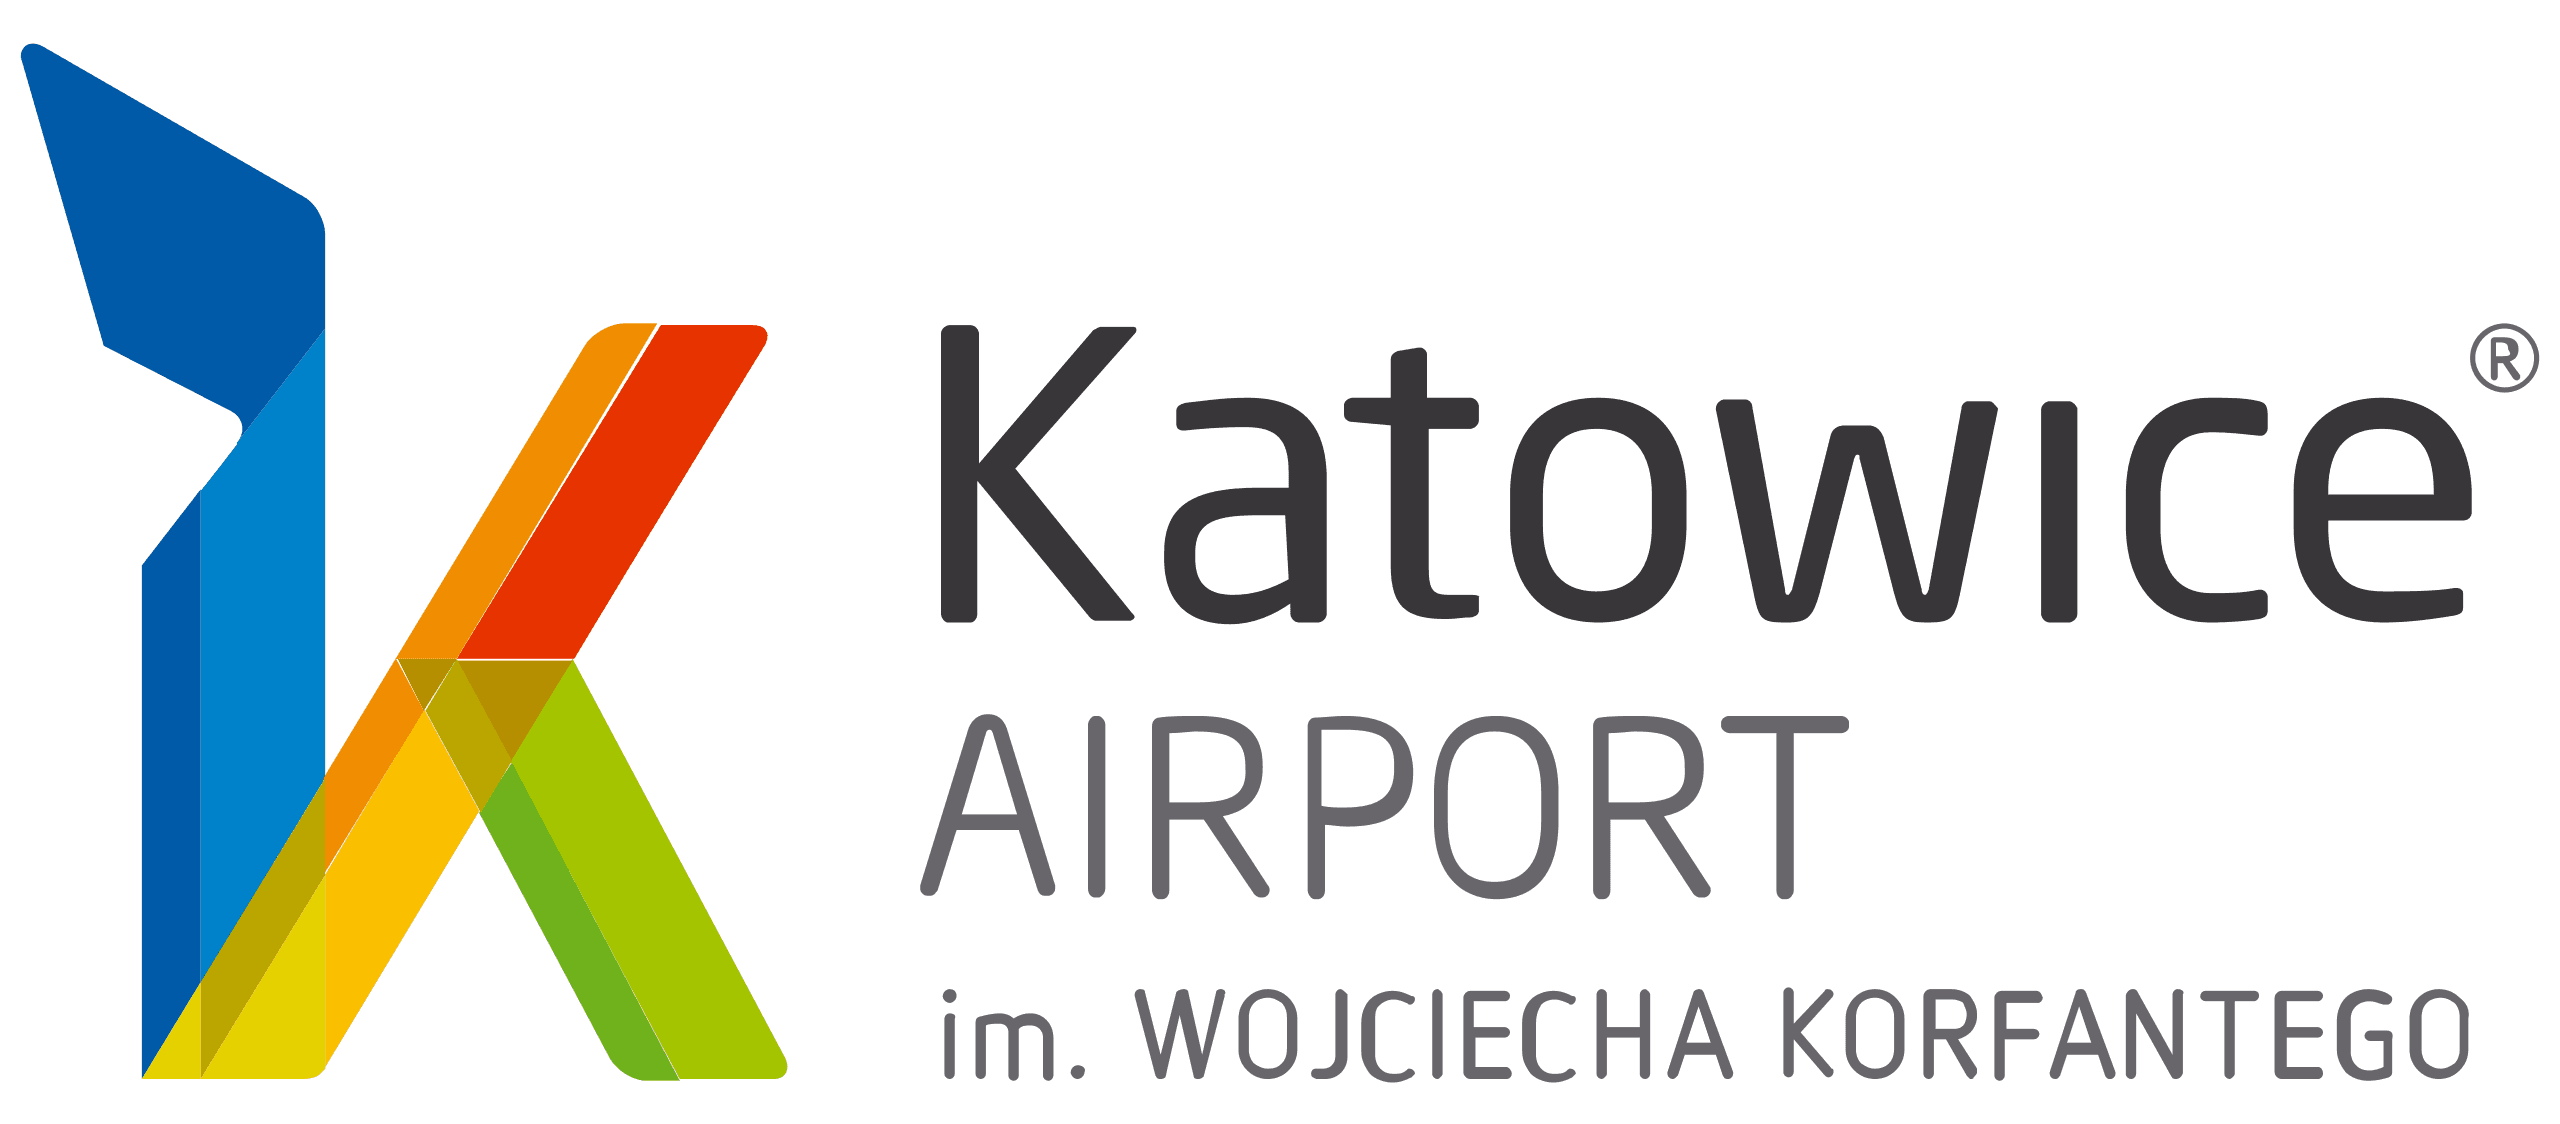 katowice airport logo